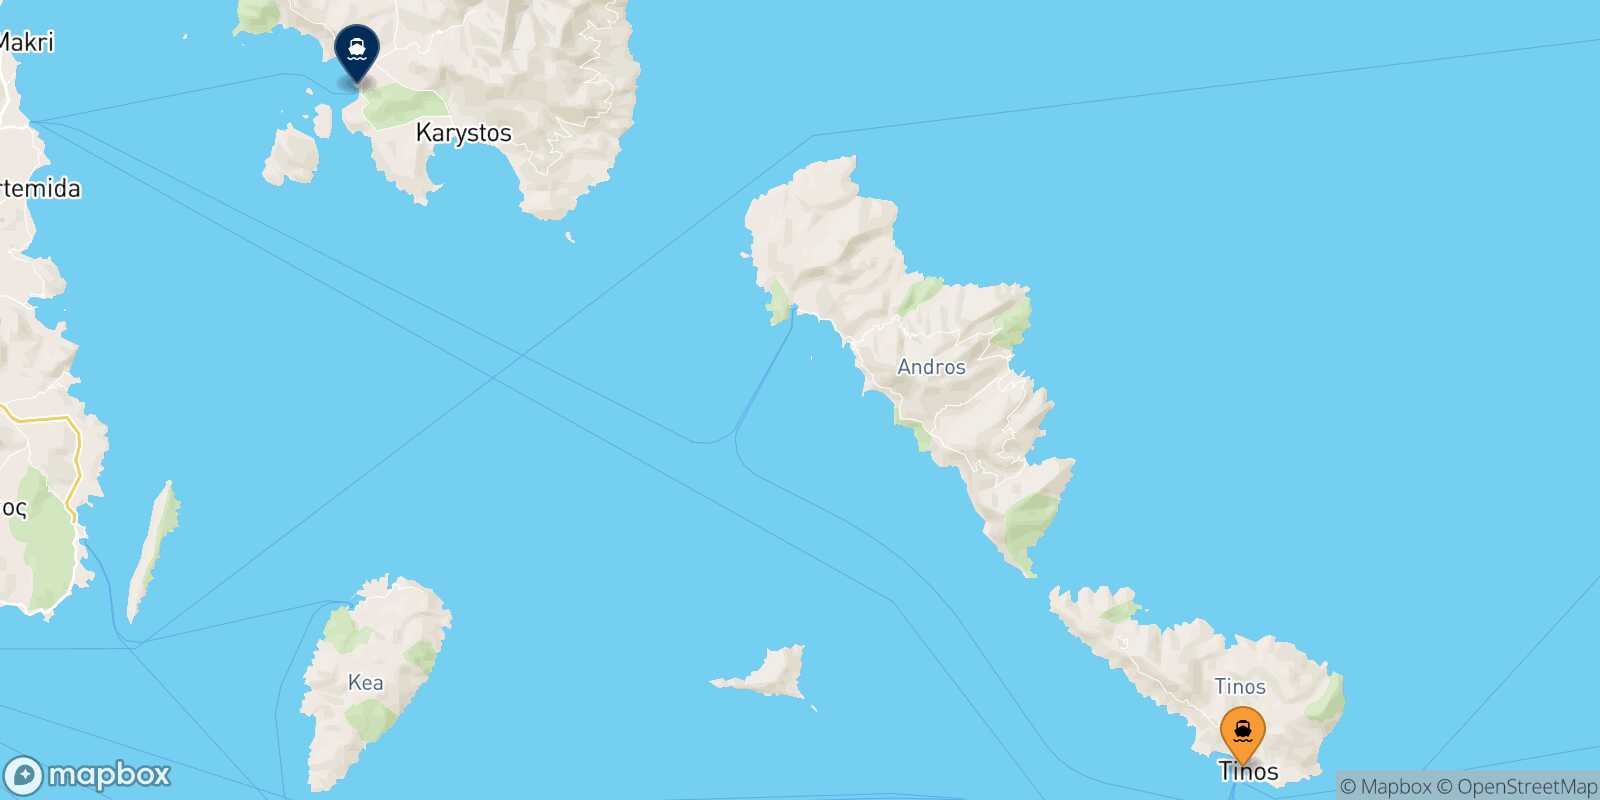 Carte des traverséesTinos Karystos